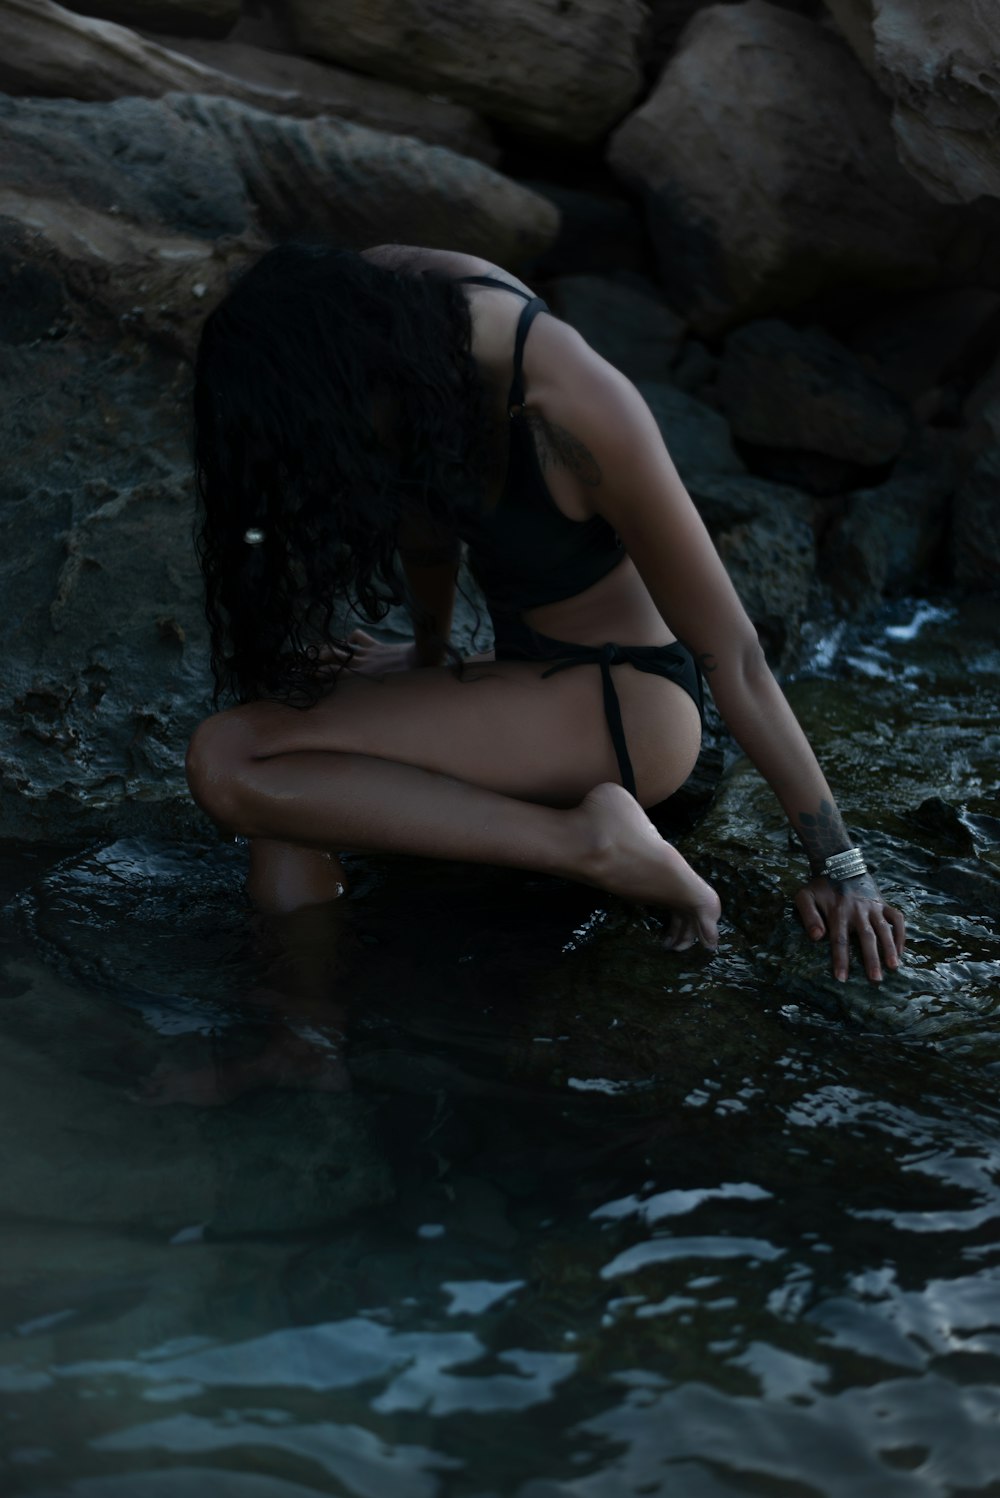 a woman in a black bikini sitting in a body of water